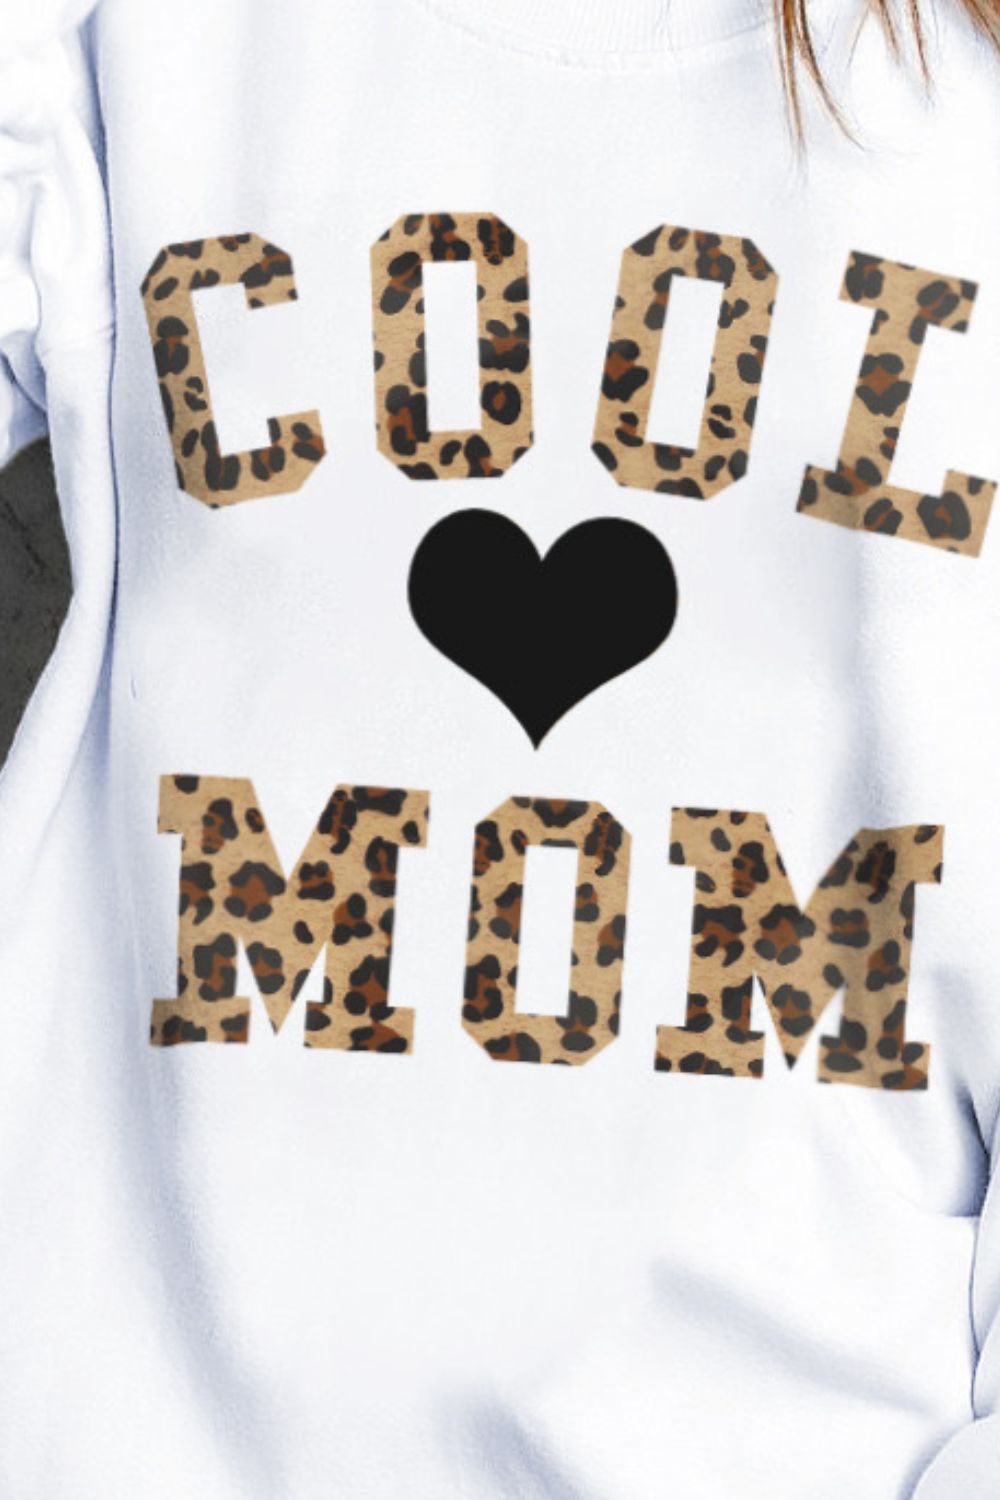 COOL MOM Heart Graphic Round Neck Sweatshirt